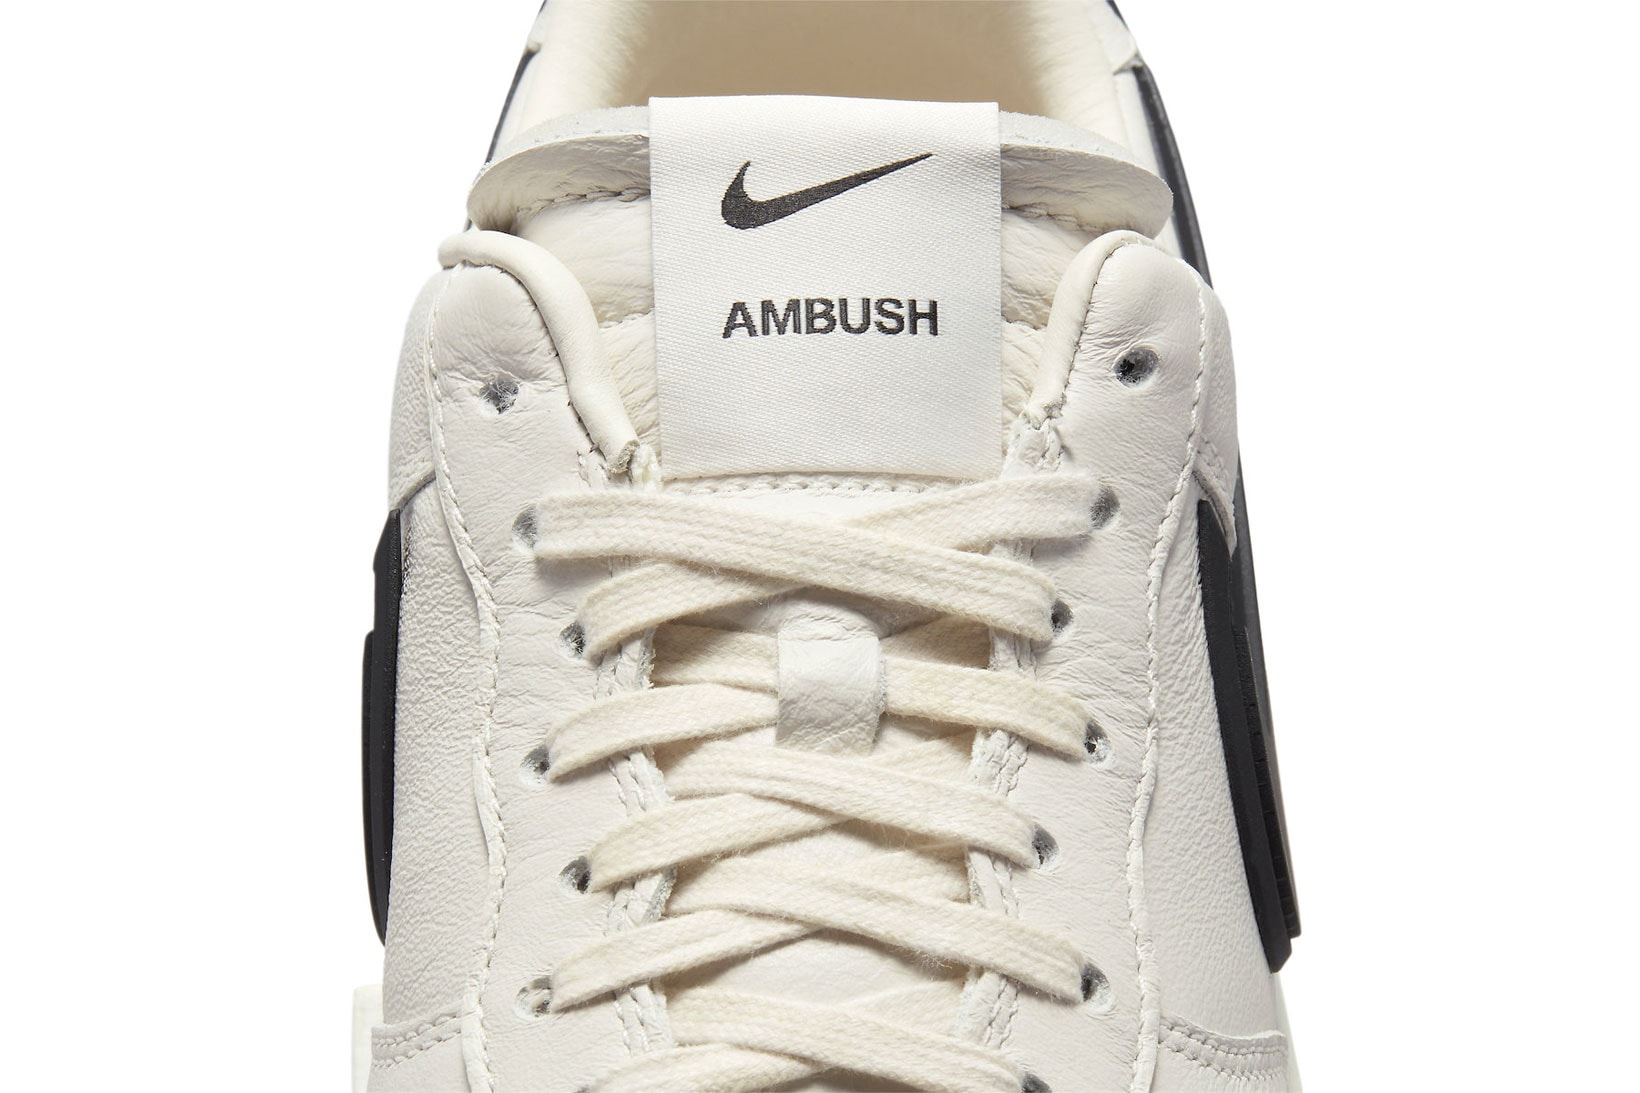 AMBUSH orange nike free run jamaican color shoes store hours Phantom White Black Release Date Price